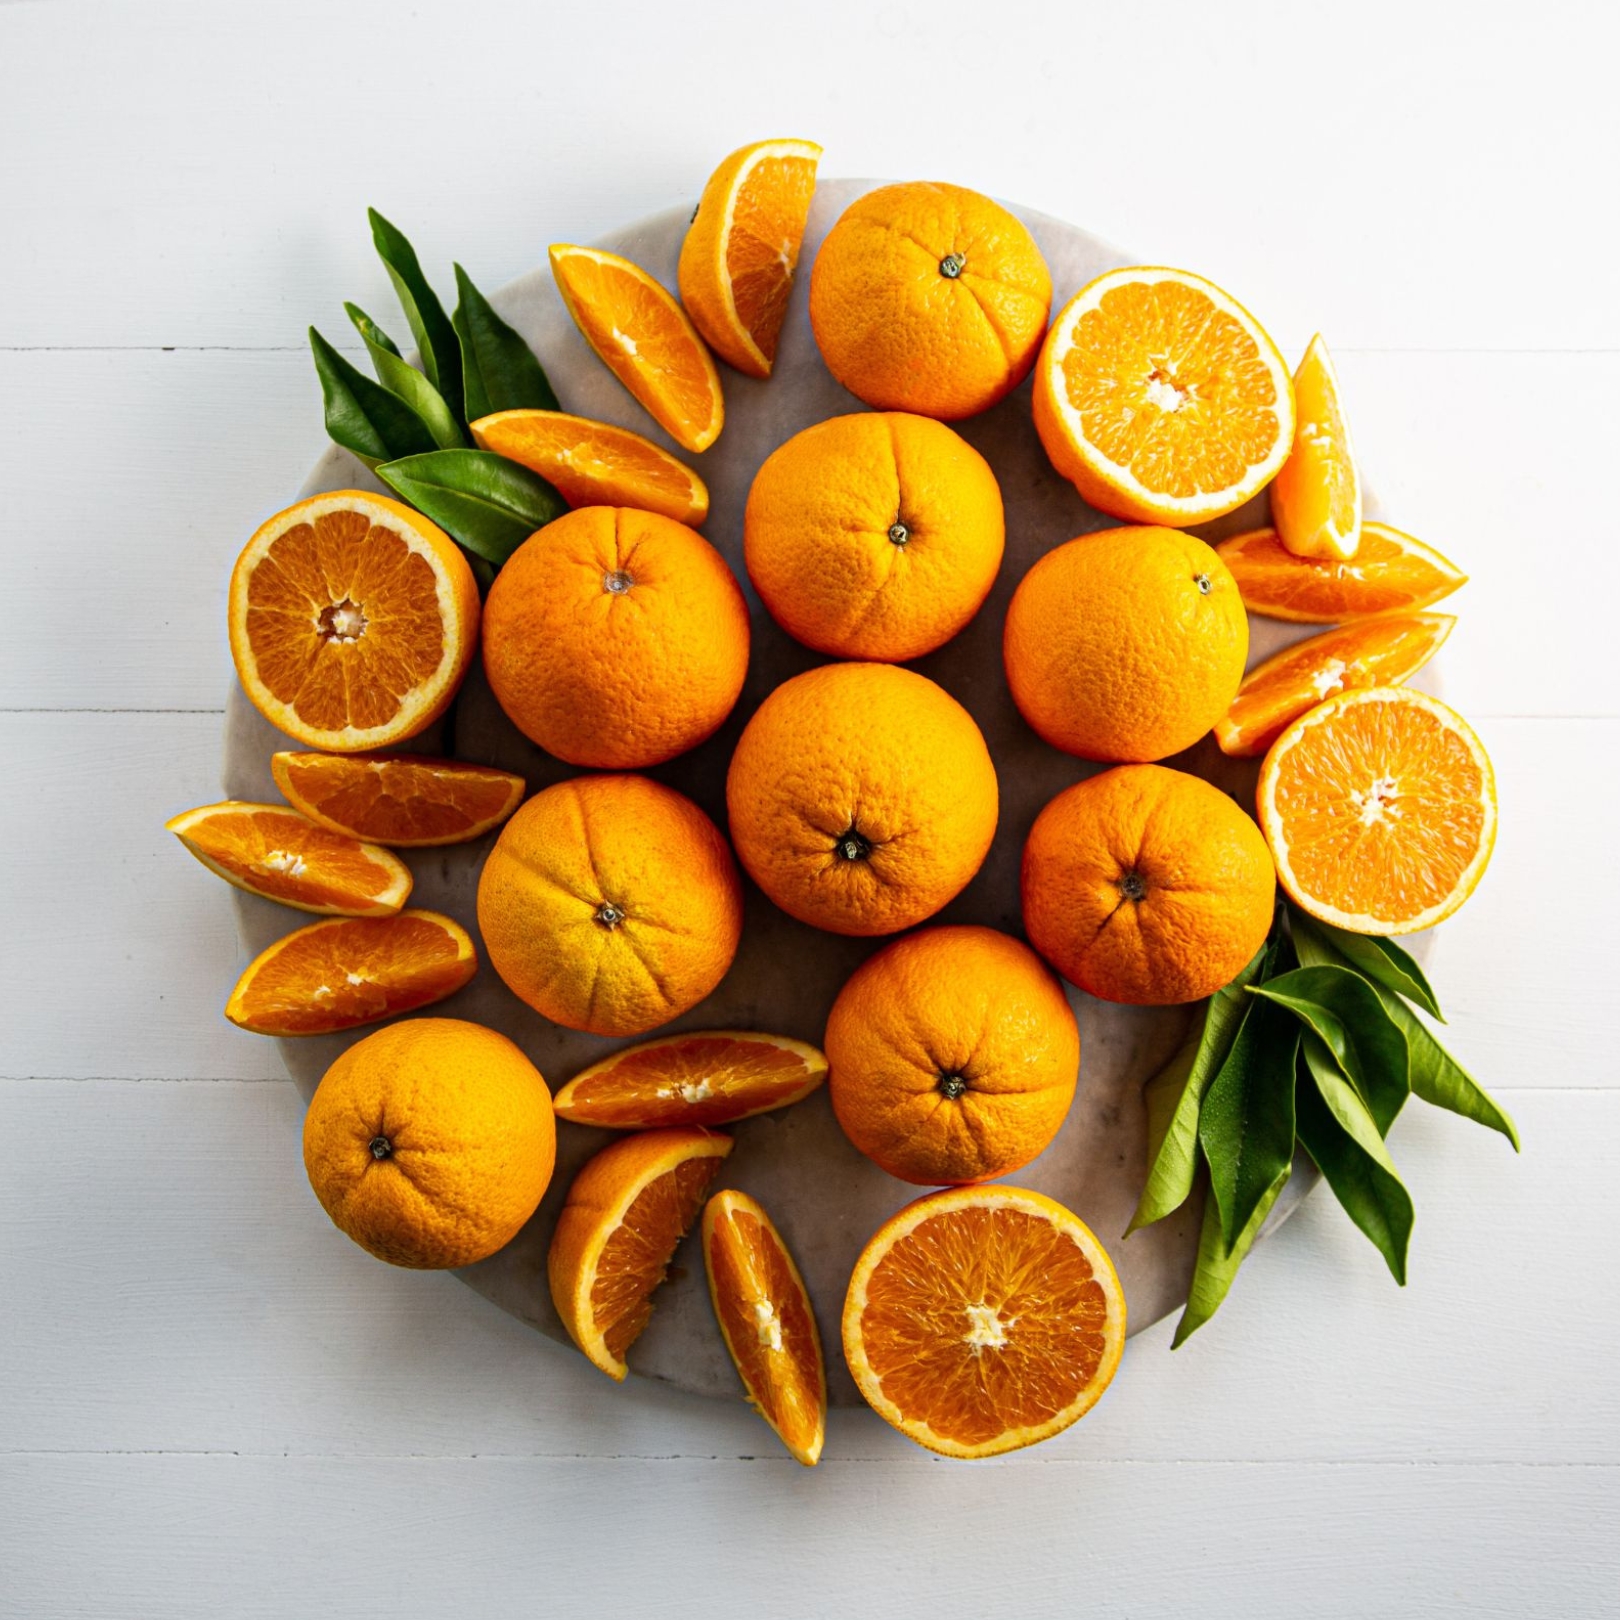 Buy Oranges - Summer Kiss Online NZ